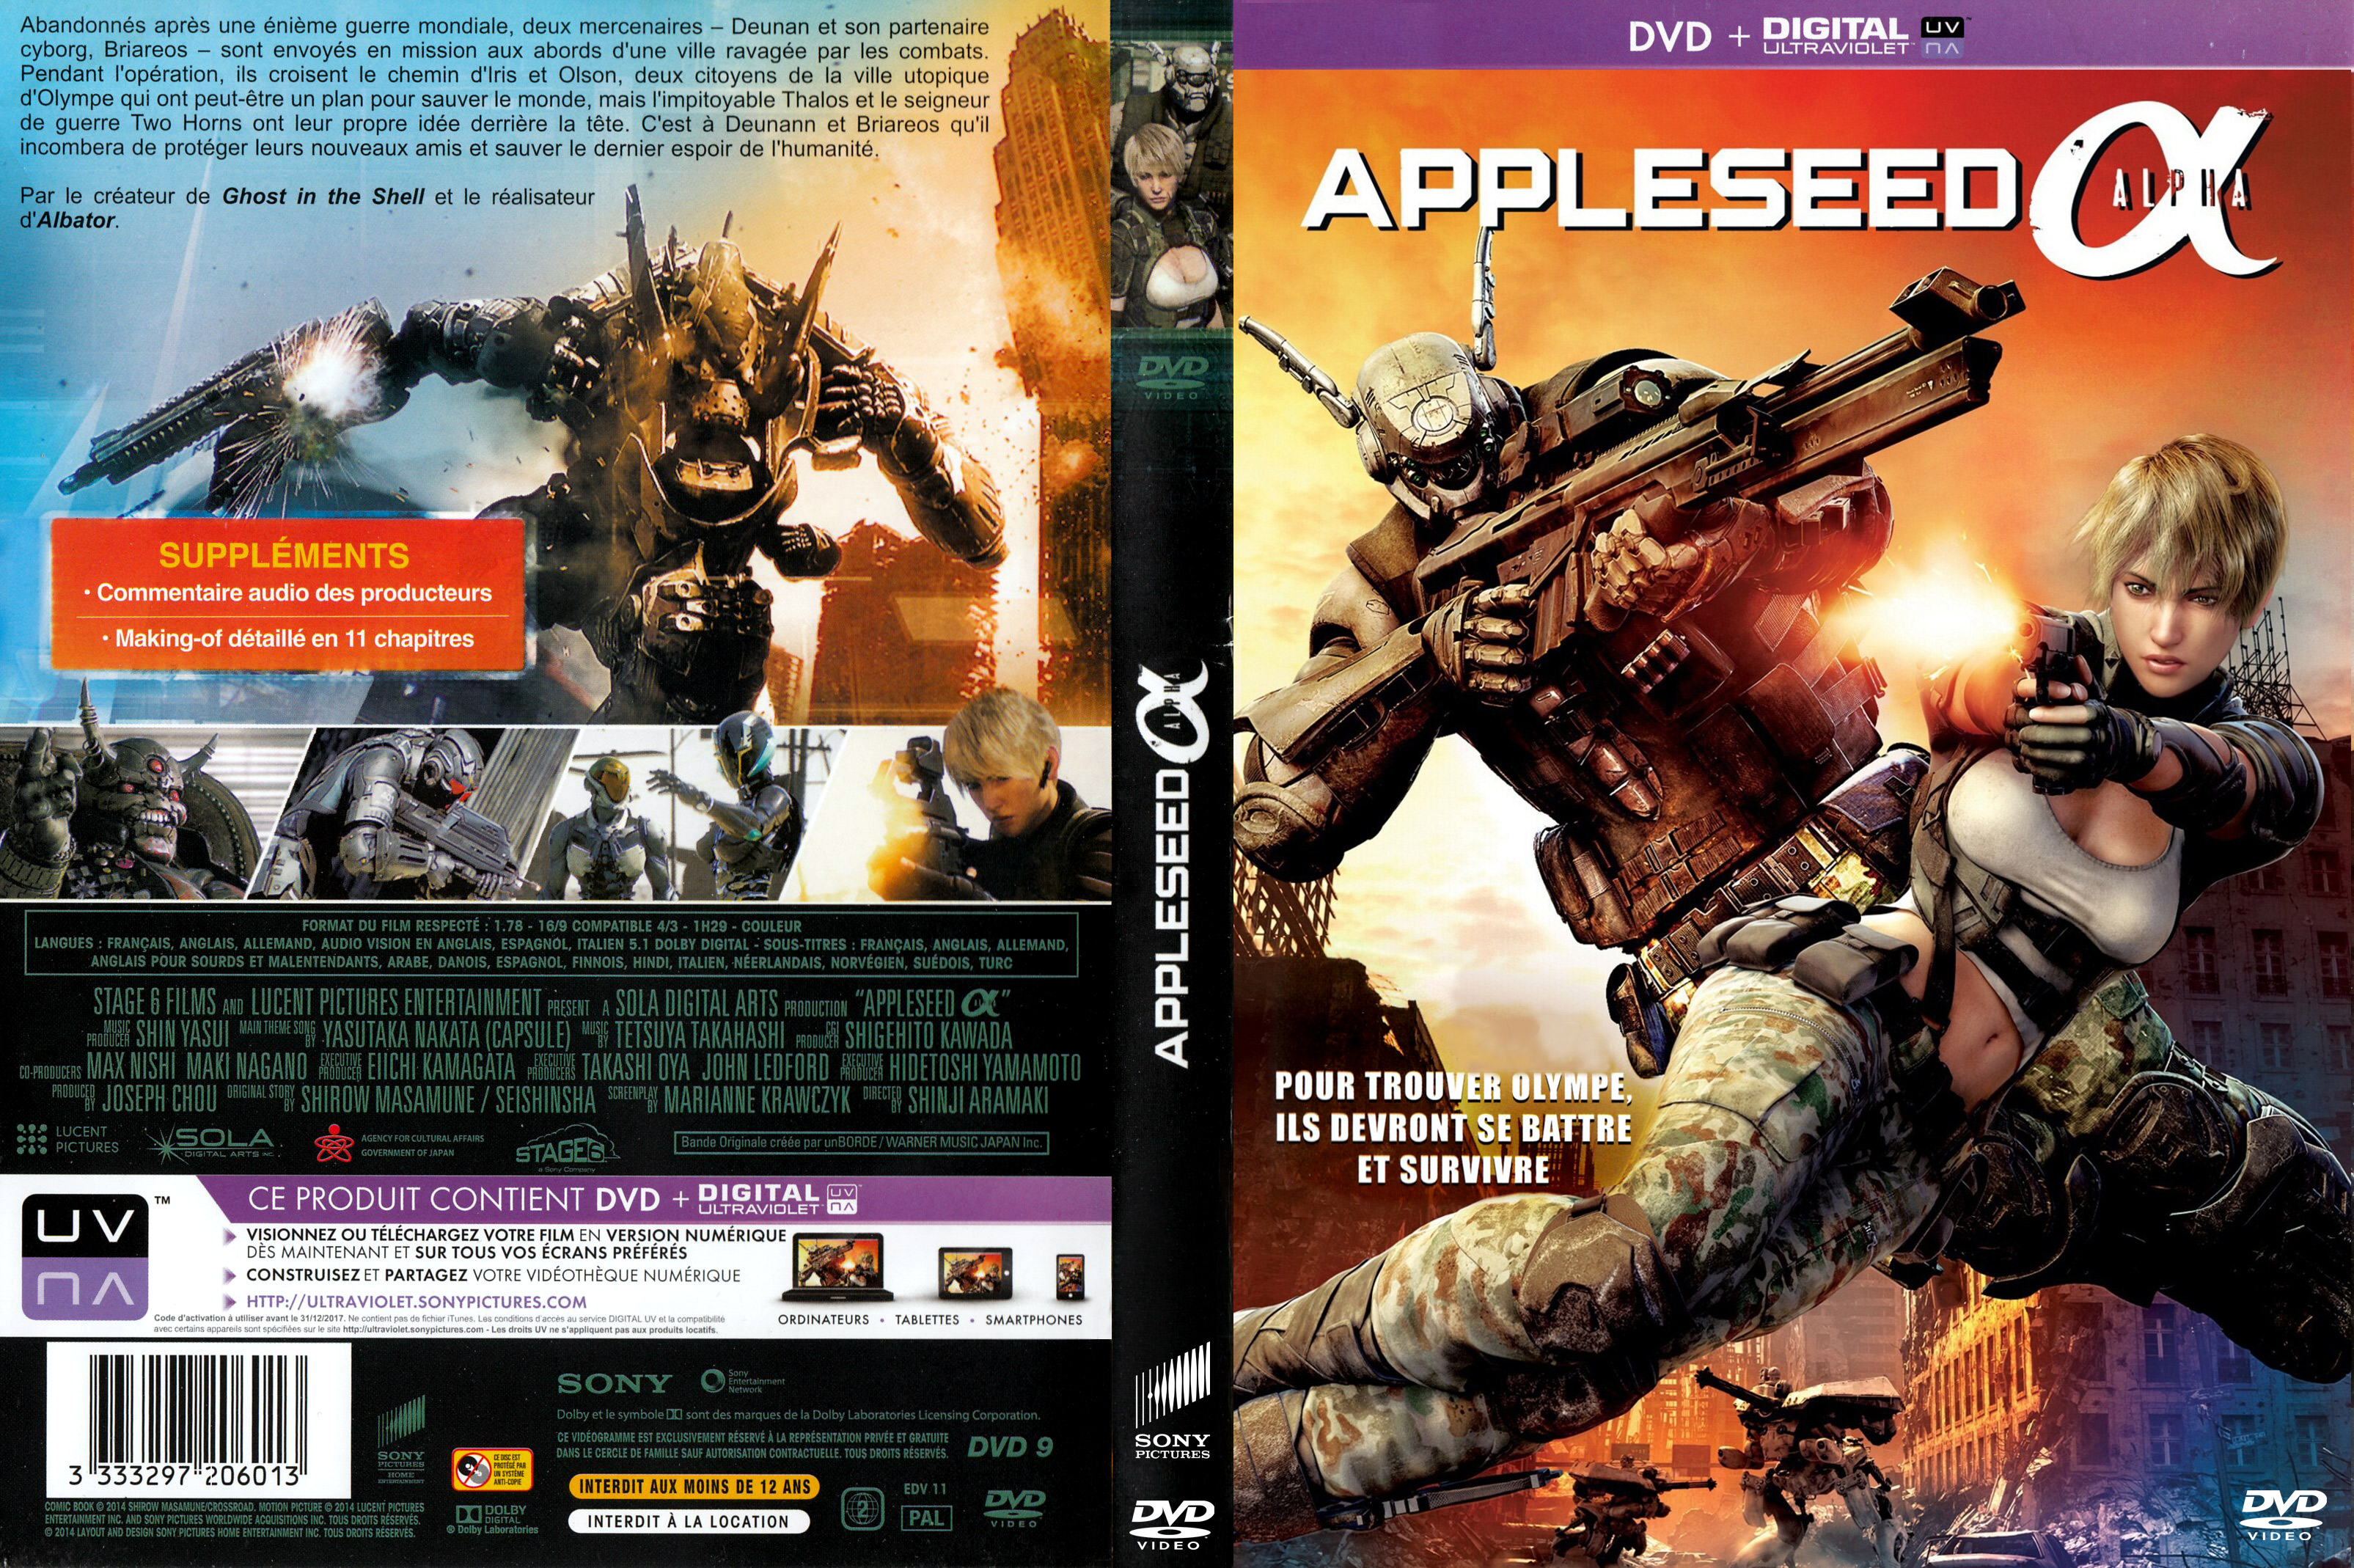 Jaquette DVD Appleseed Alpha